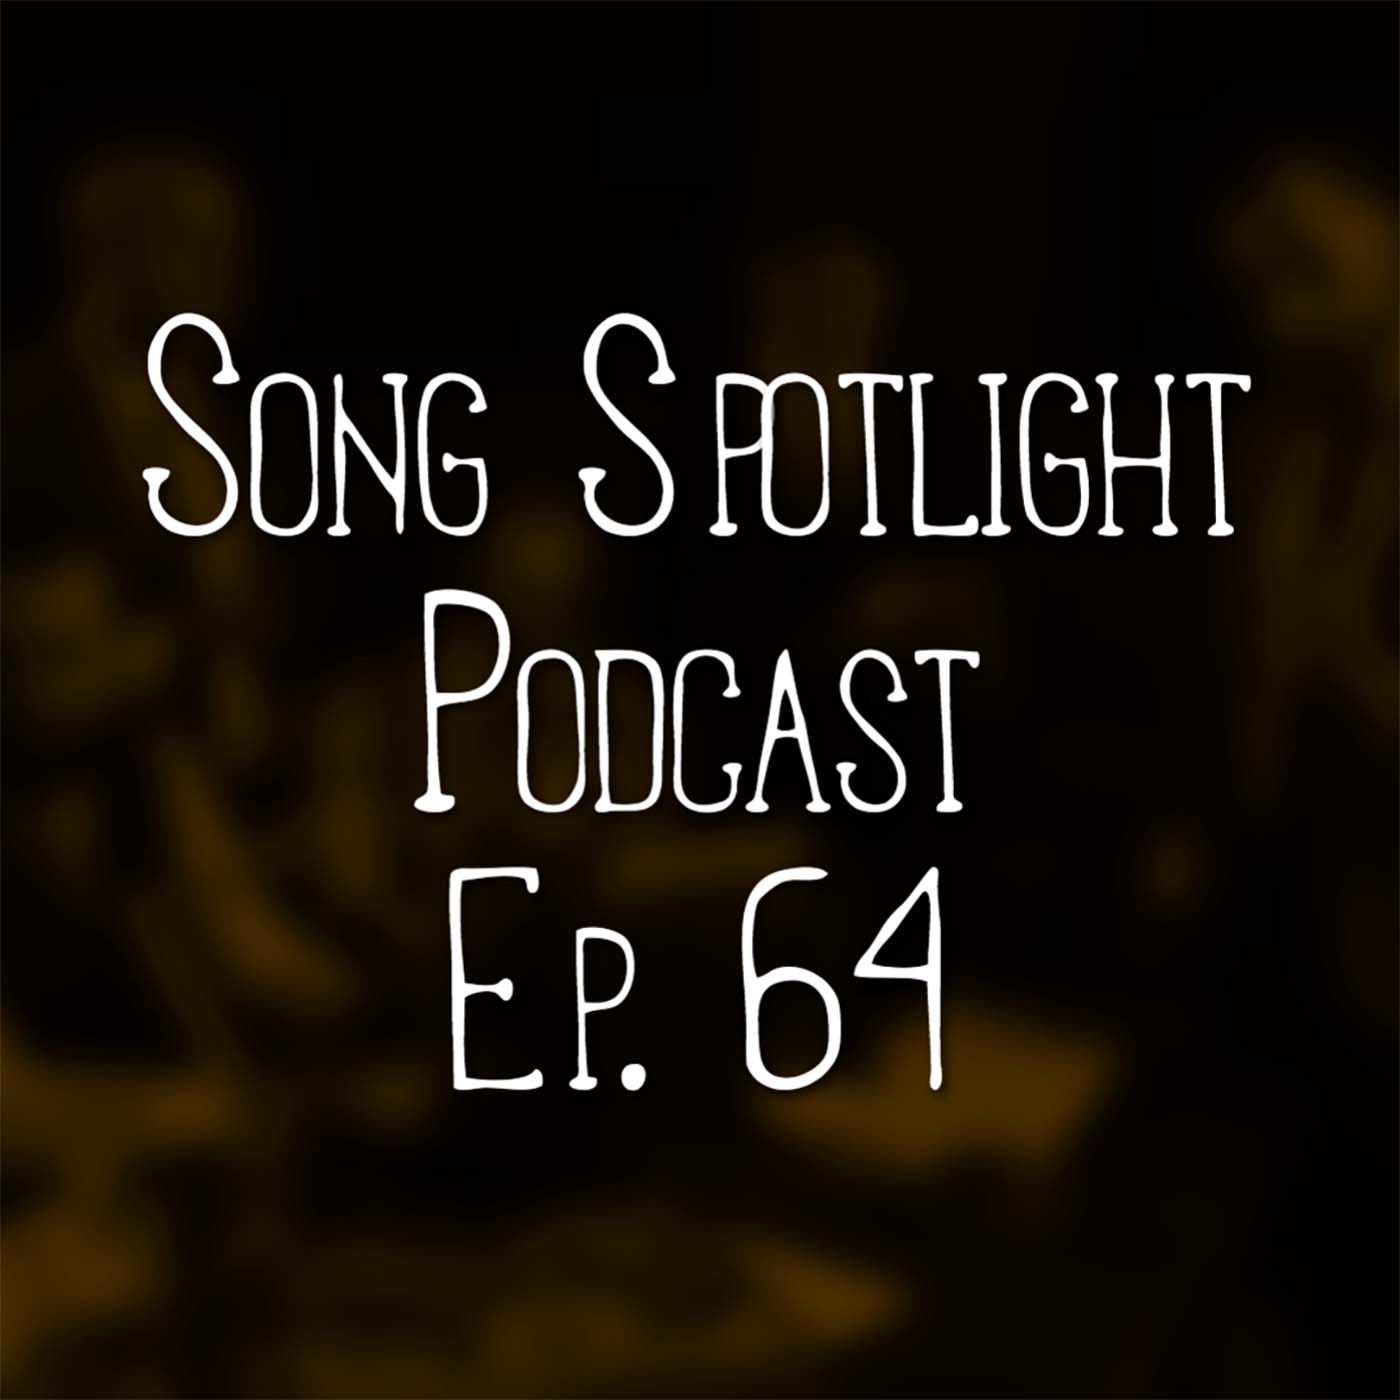 podcast episode 64 image